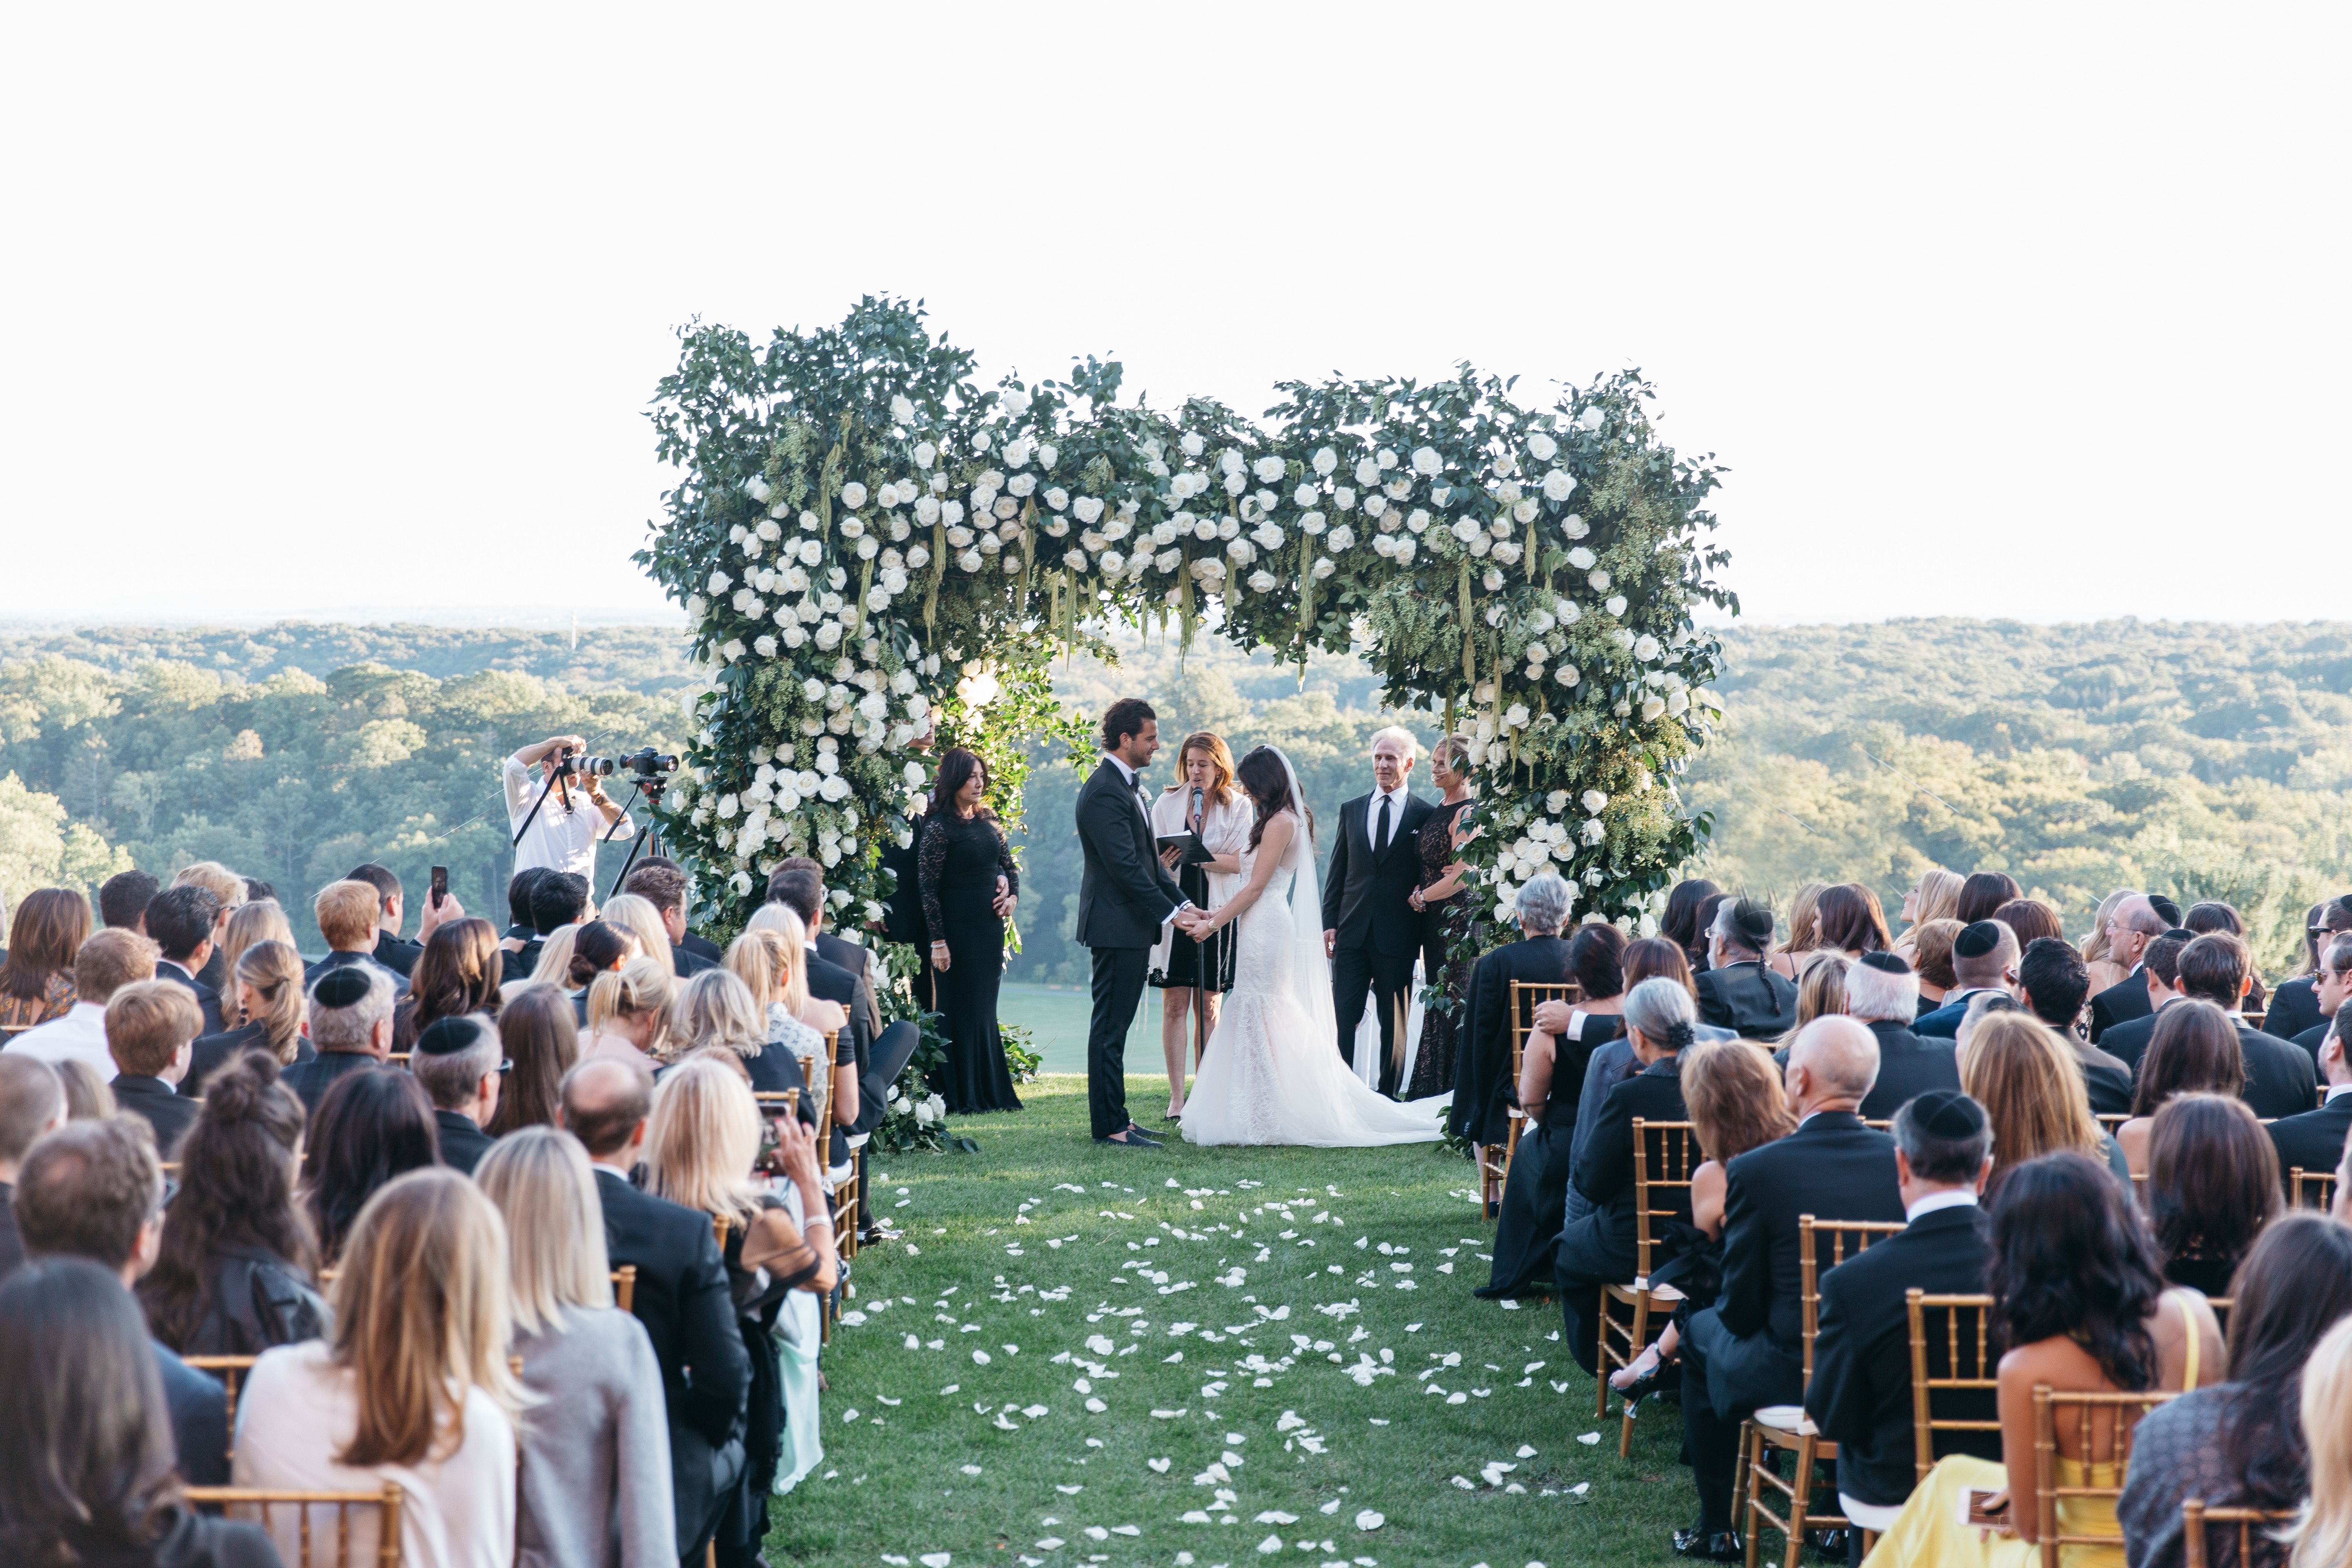 12 Pretty Wedding Arch Ideas - Rustic, Wooden and Floral Wedding